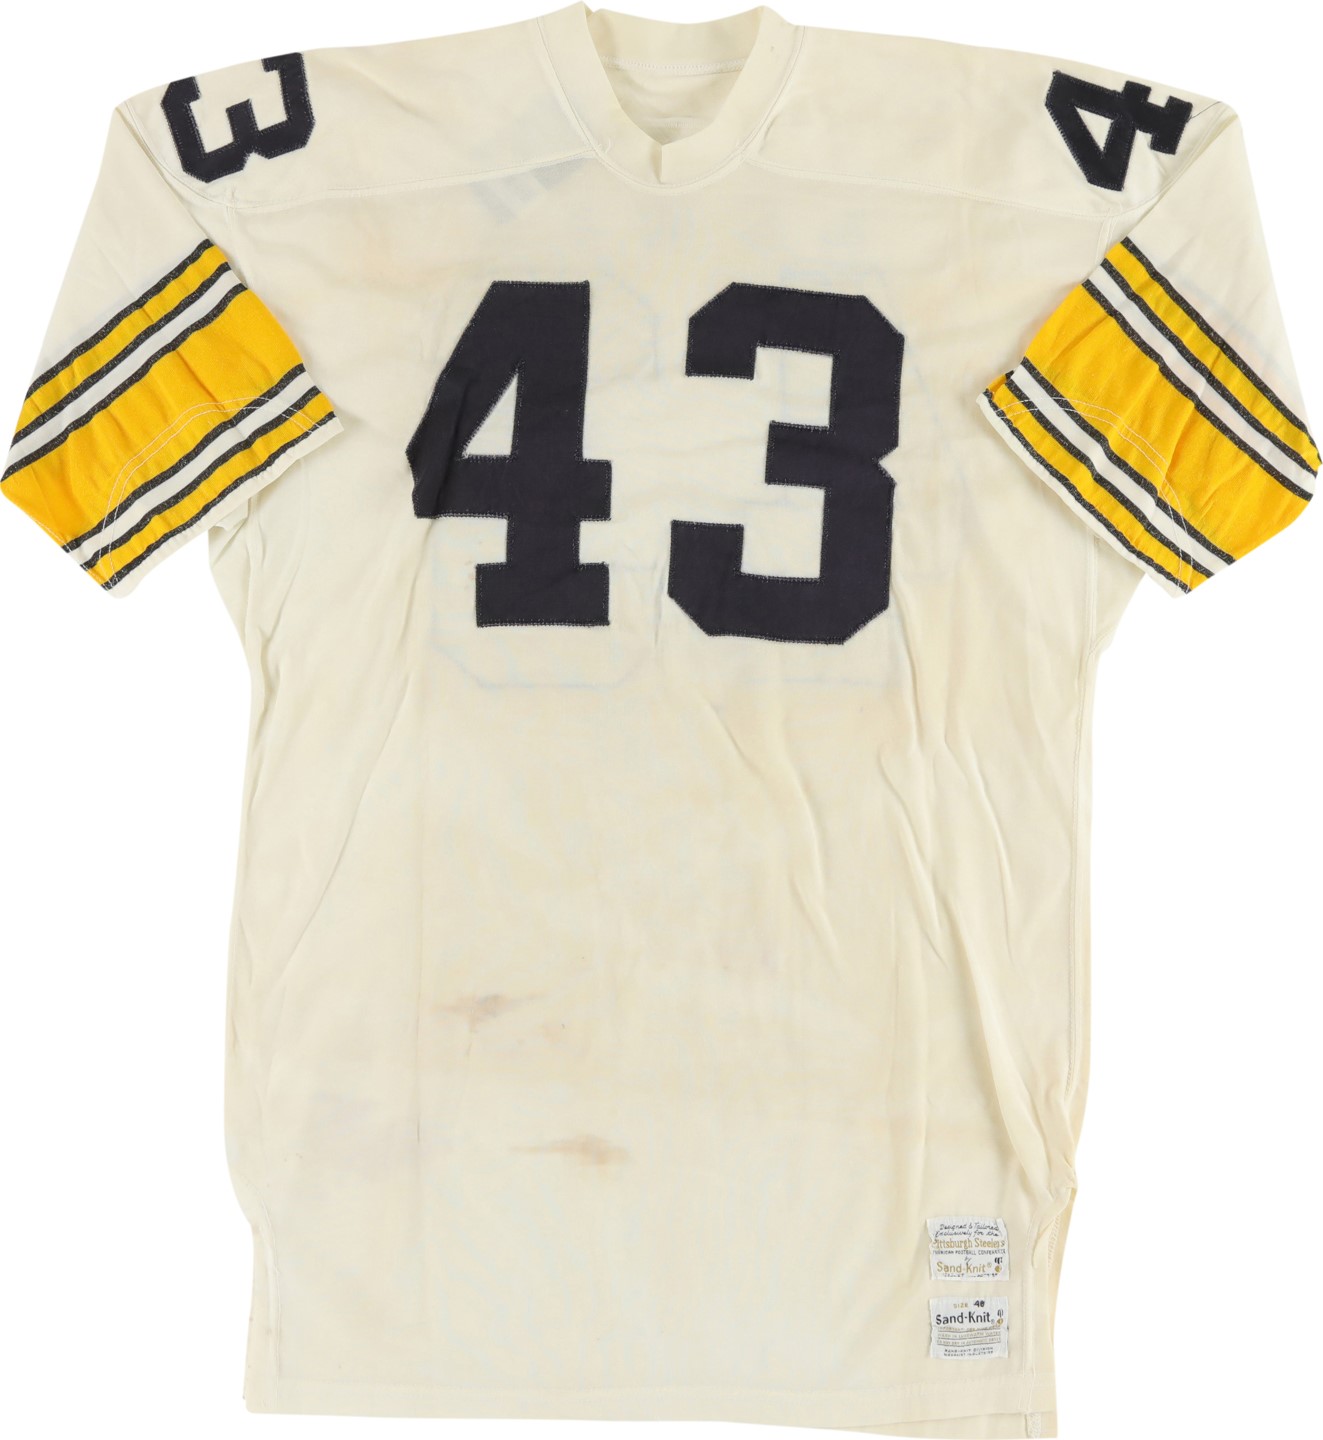 Circa 1970s Frank Lewis Pittsburgh Steelers Game Worn Jersey